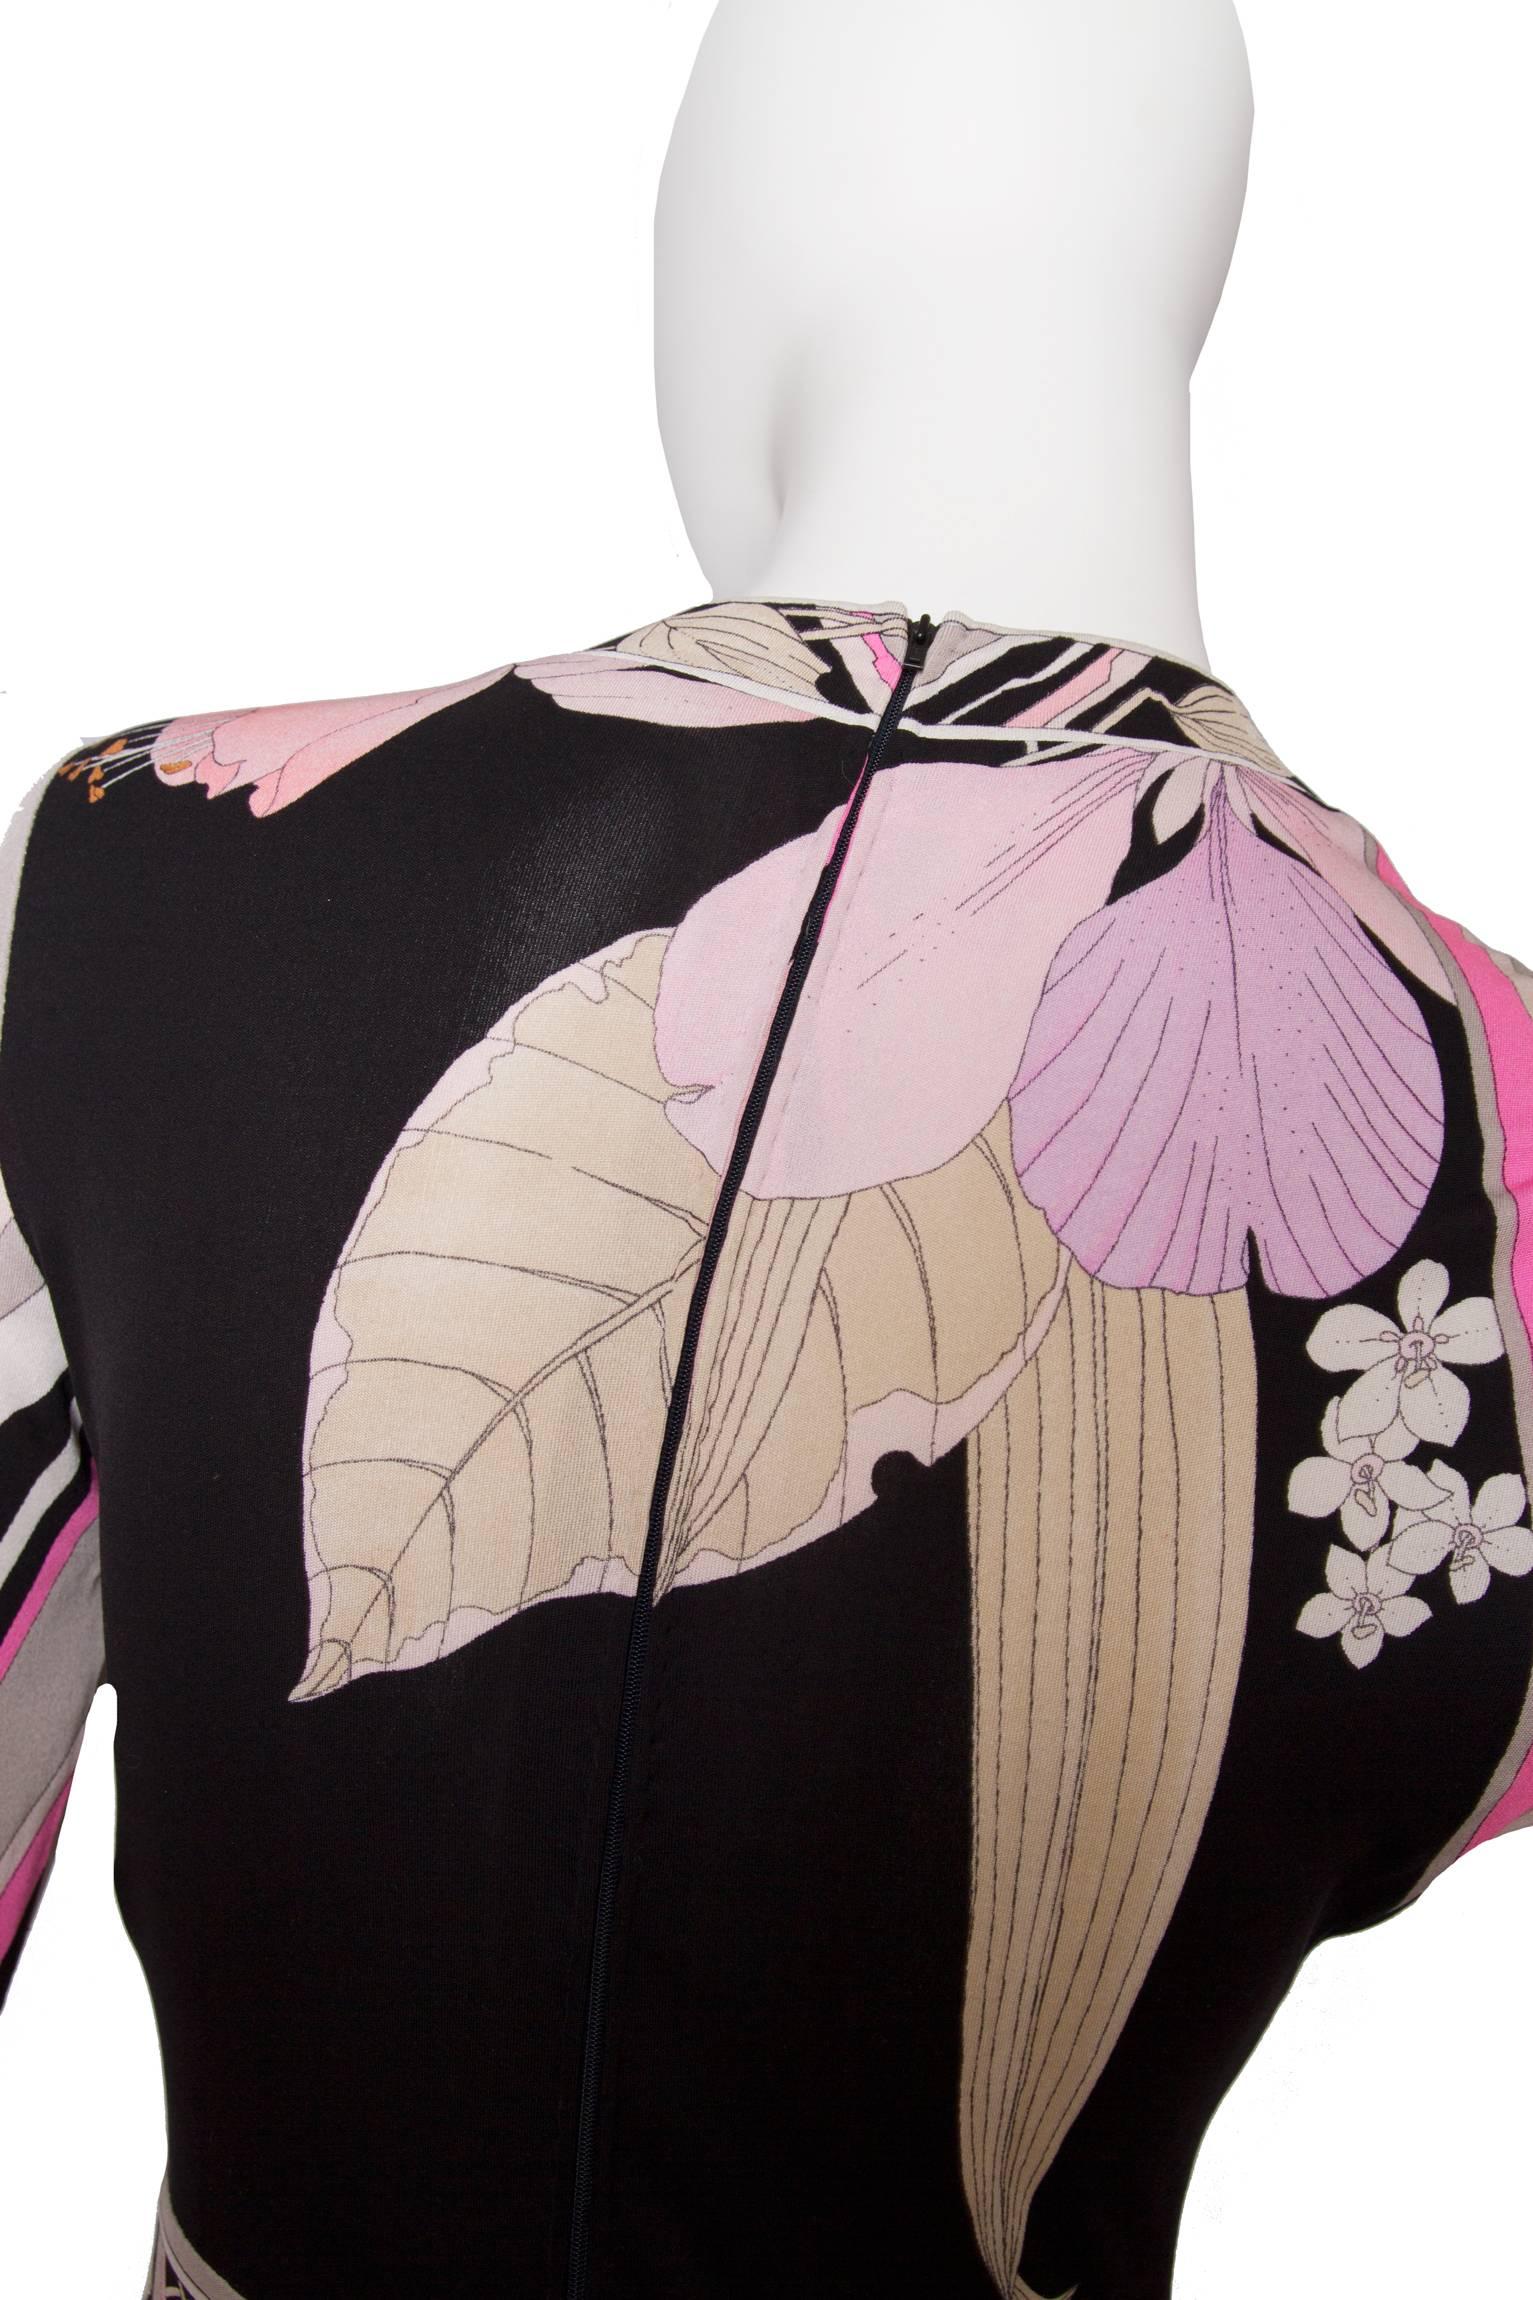 Women's or Men's A 1970s Vintage Leonard Silk Jersey Dress With Floral Print